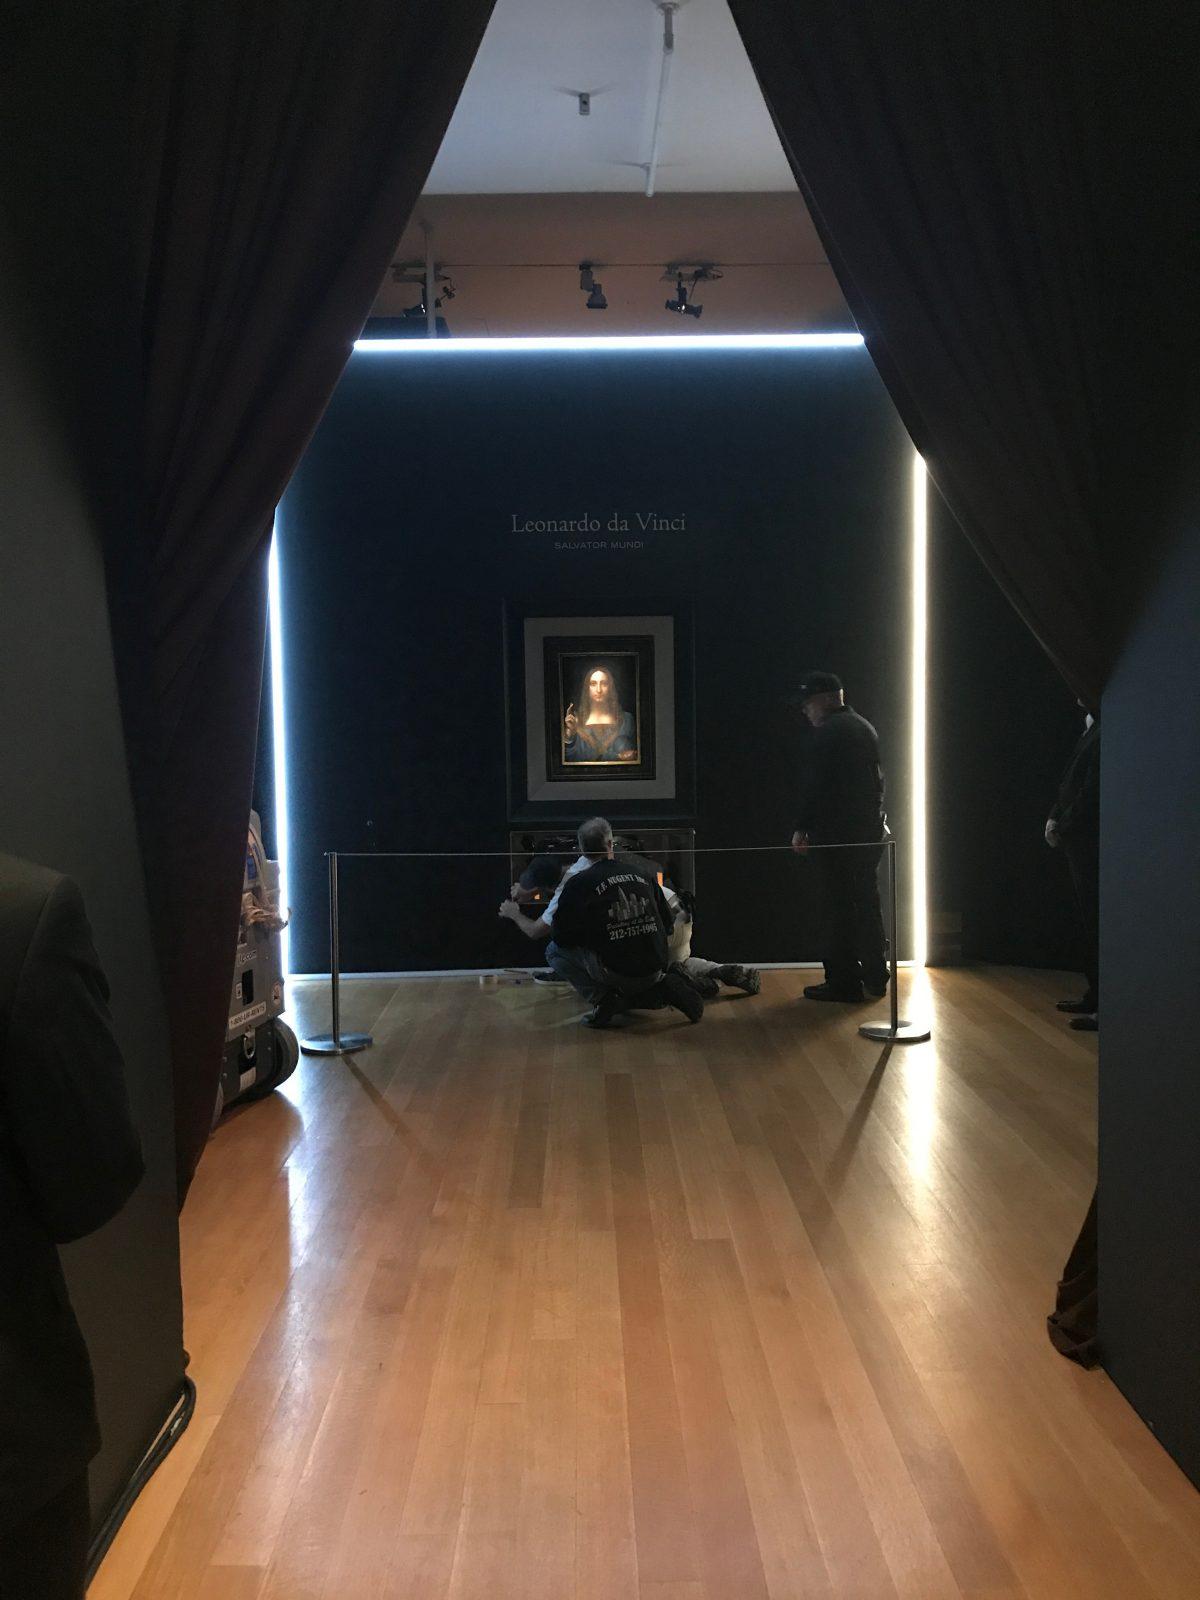 Christie's staff fix the installation of the "Salvator Mundi" painting by Leonardo da Vinci at Christie's in New York on Nov. 3, 2017. (Milene Fernandez/The Epoch Times)